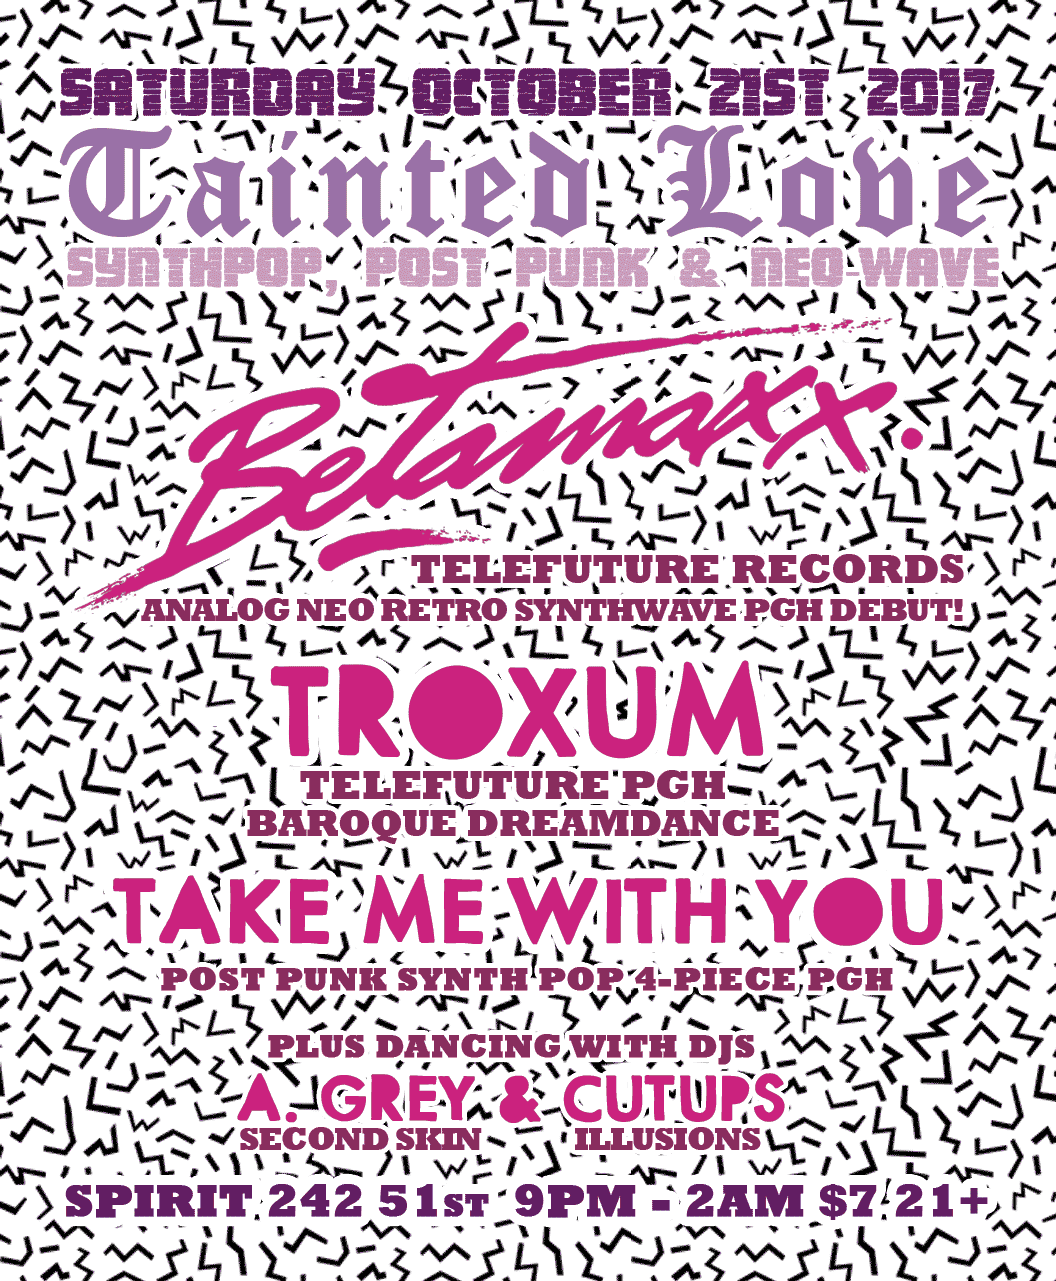 Sat Oct 21st TAINTED LOVE w/ Betamaxx, Troxum, Take Me With You + DJs